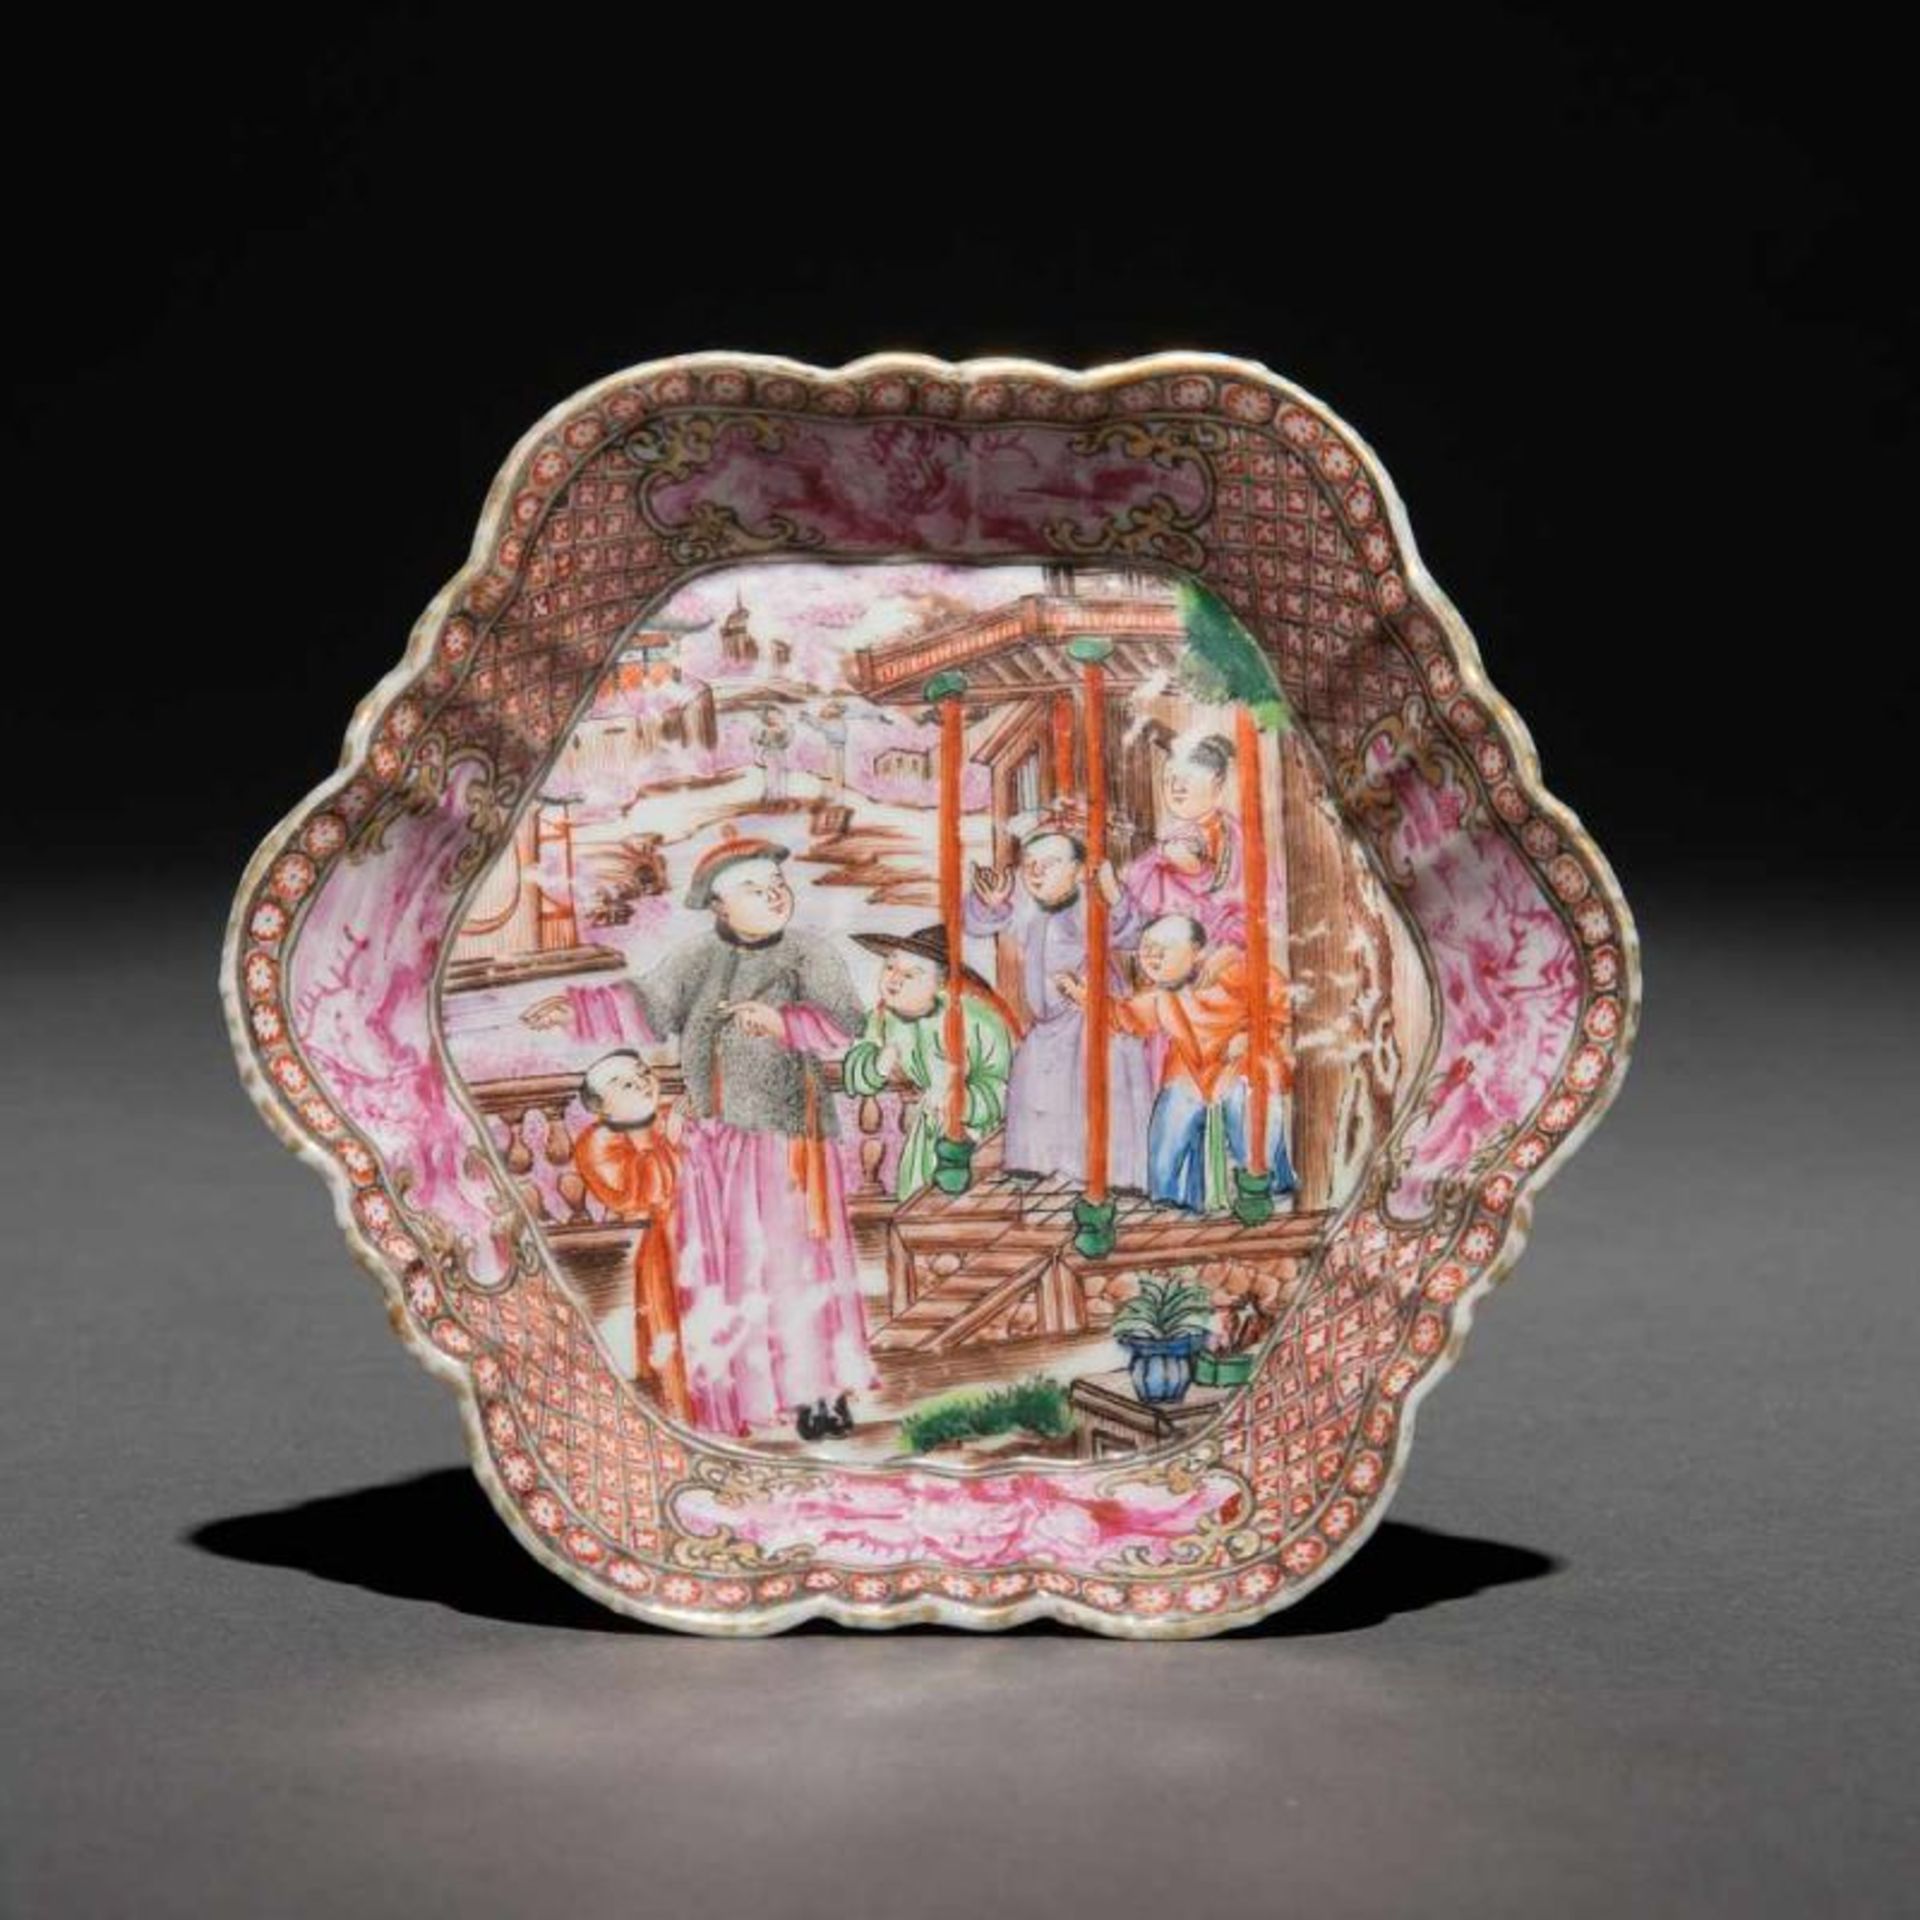 Plato en porcelana china serie mandarín. Trabajo Chino, Siglo XVIIIPresenta perfil polilobulado y